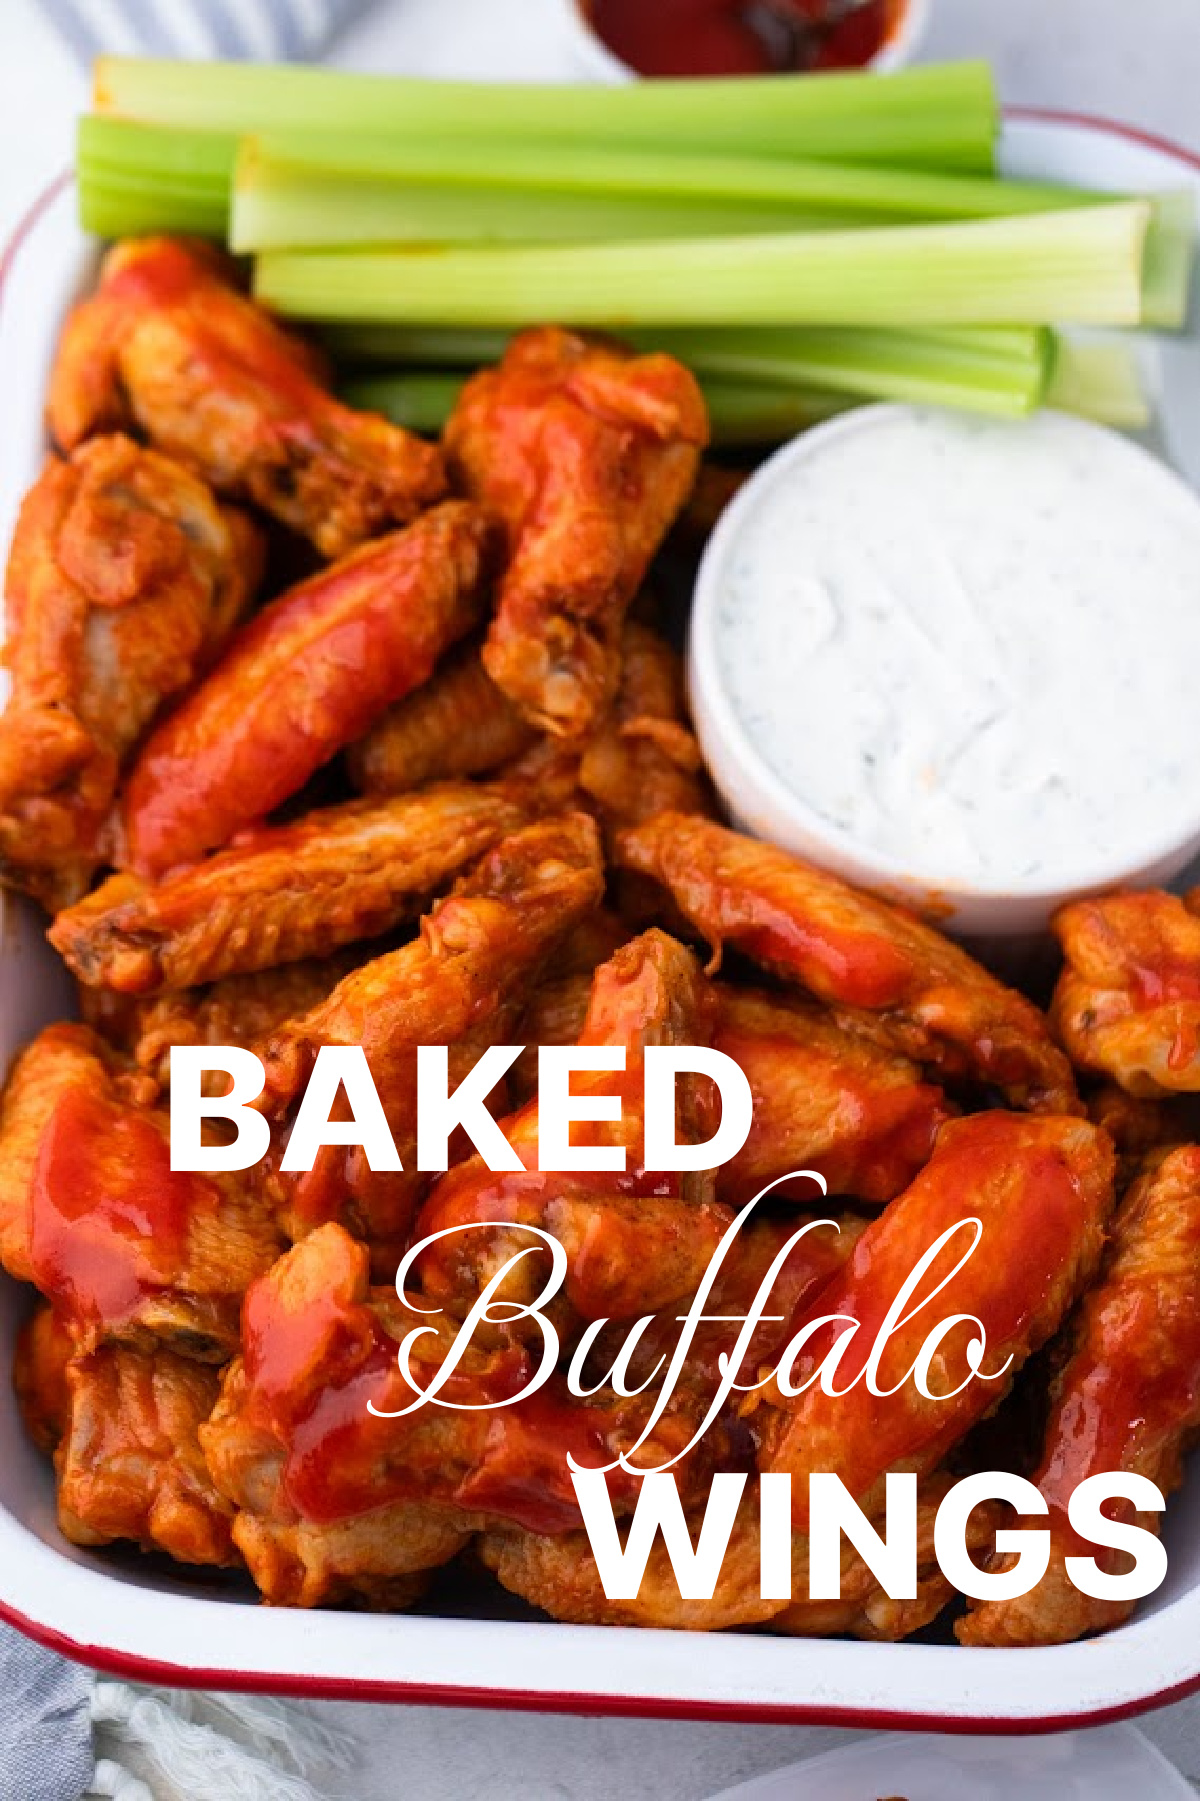 Baked Buffalo Wings